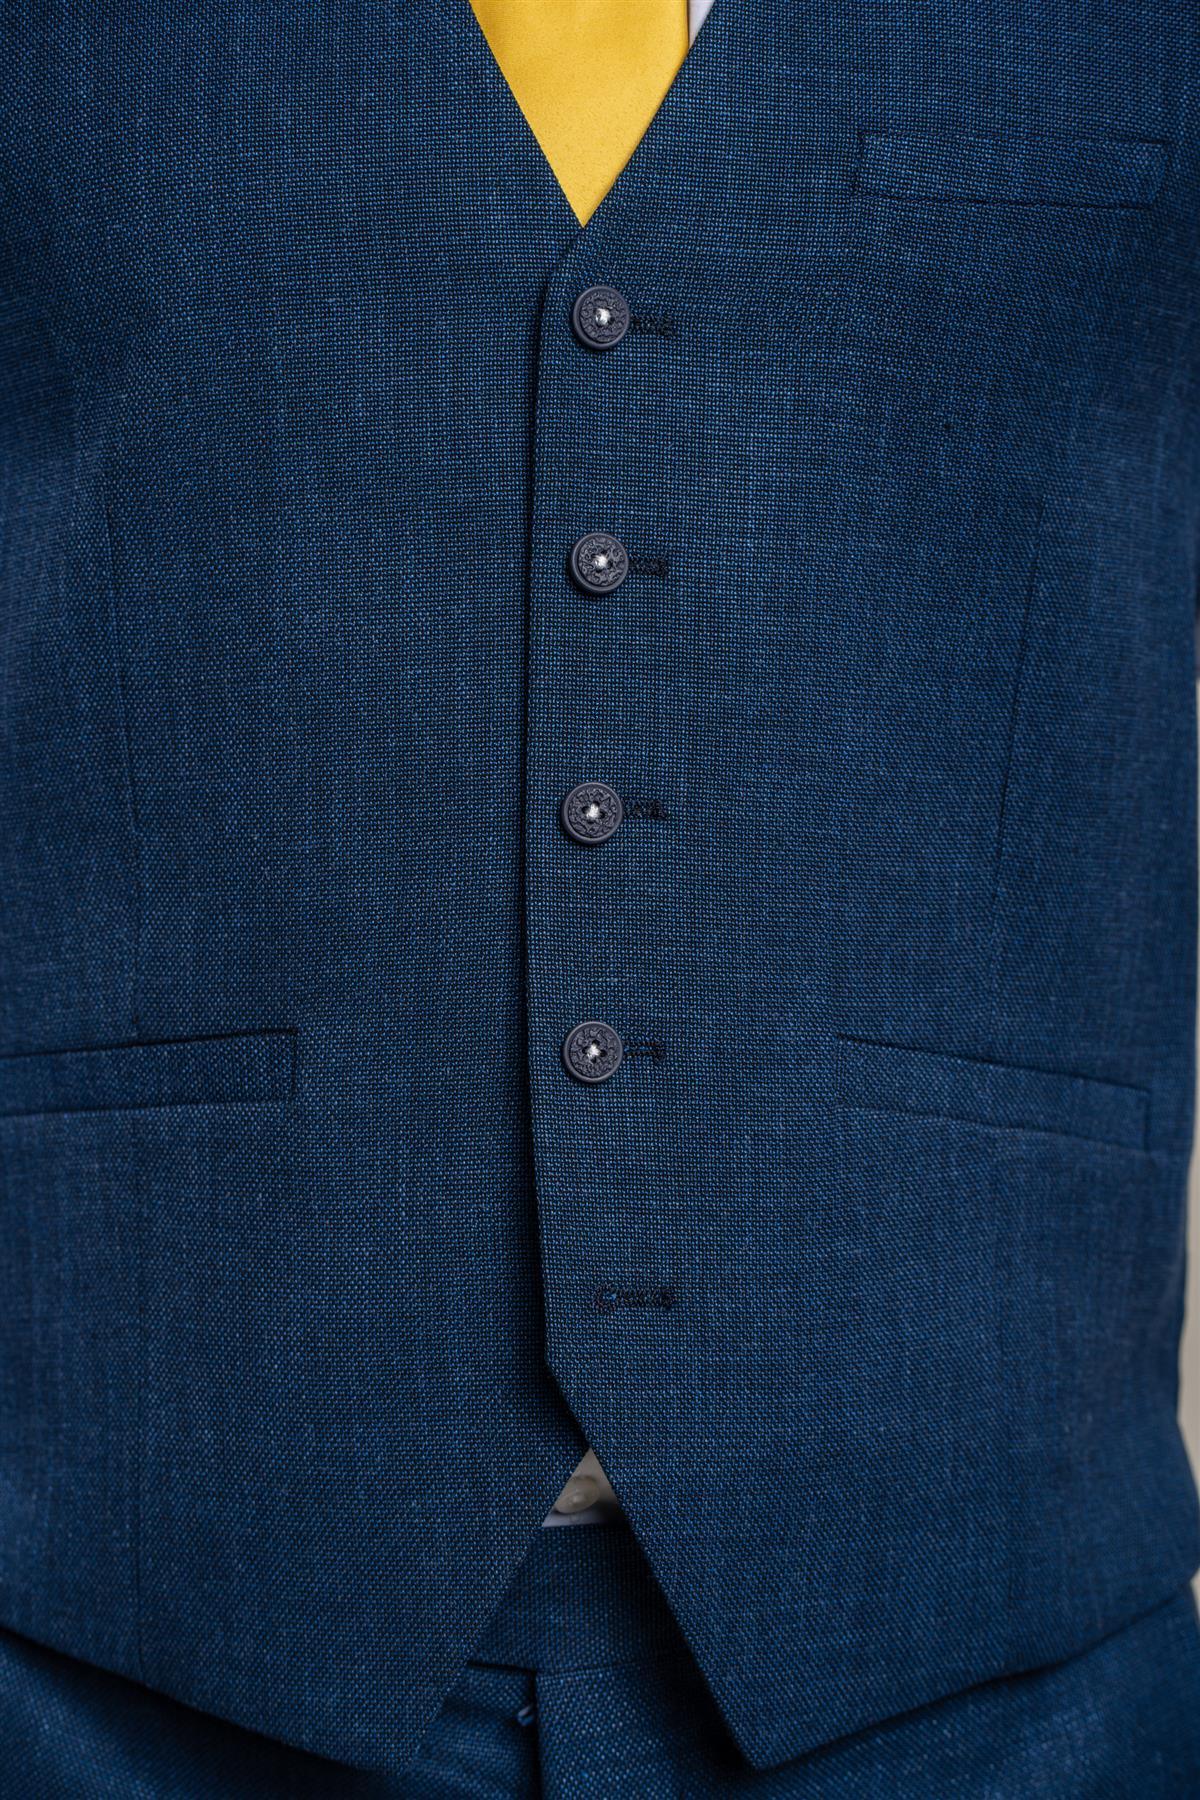 Miami blue waistcoat front detail